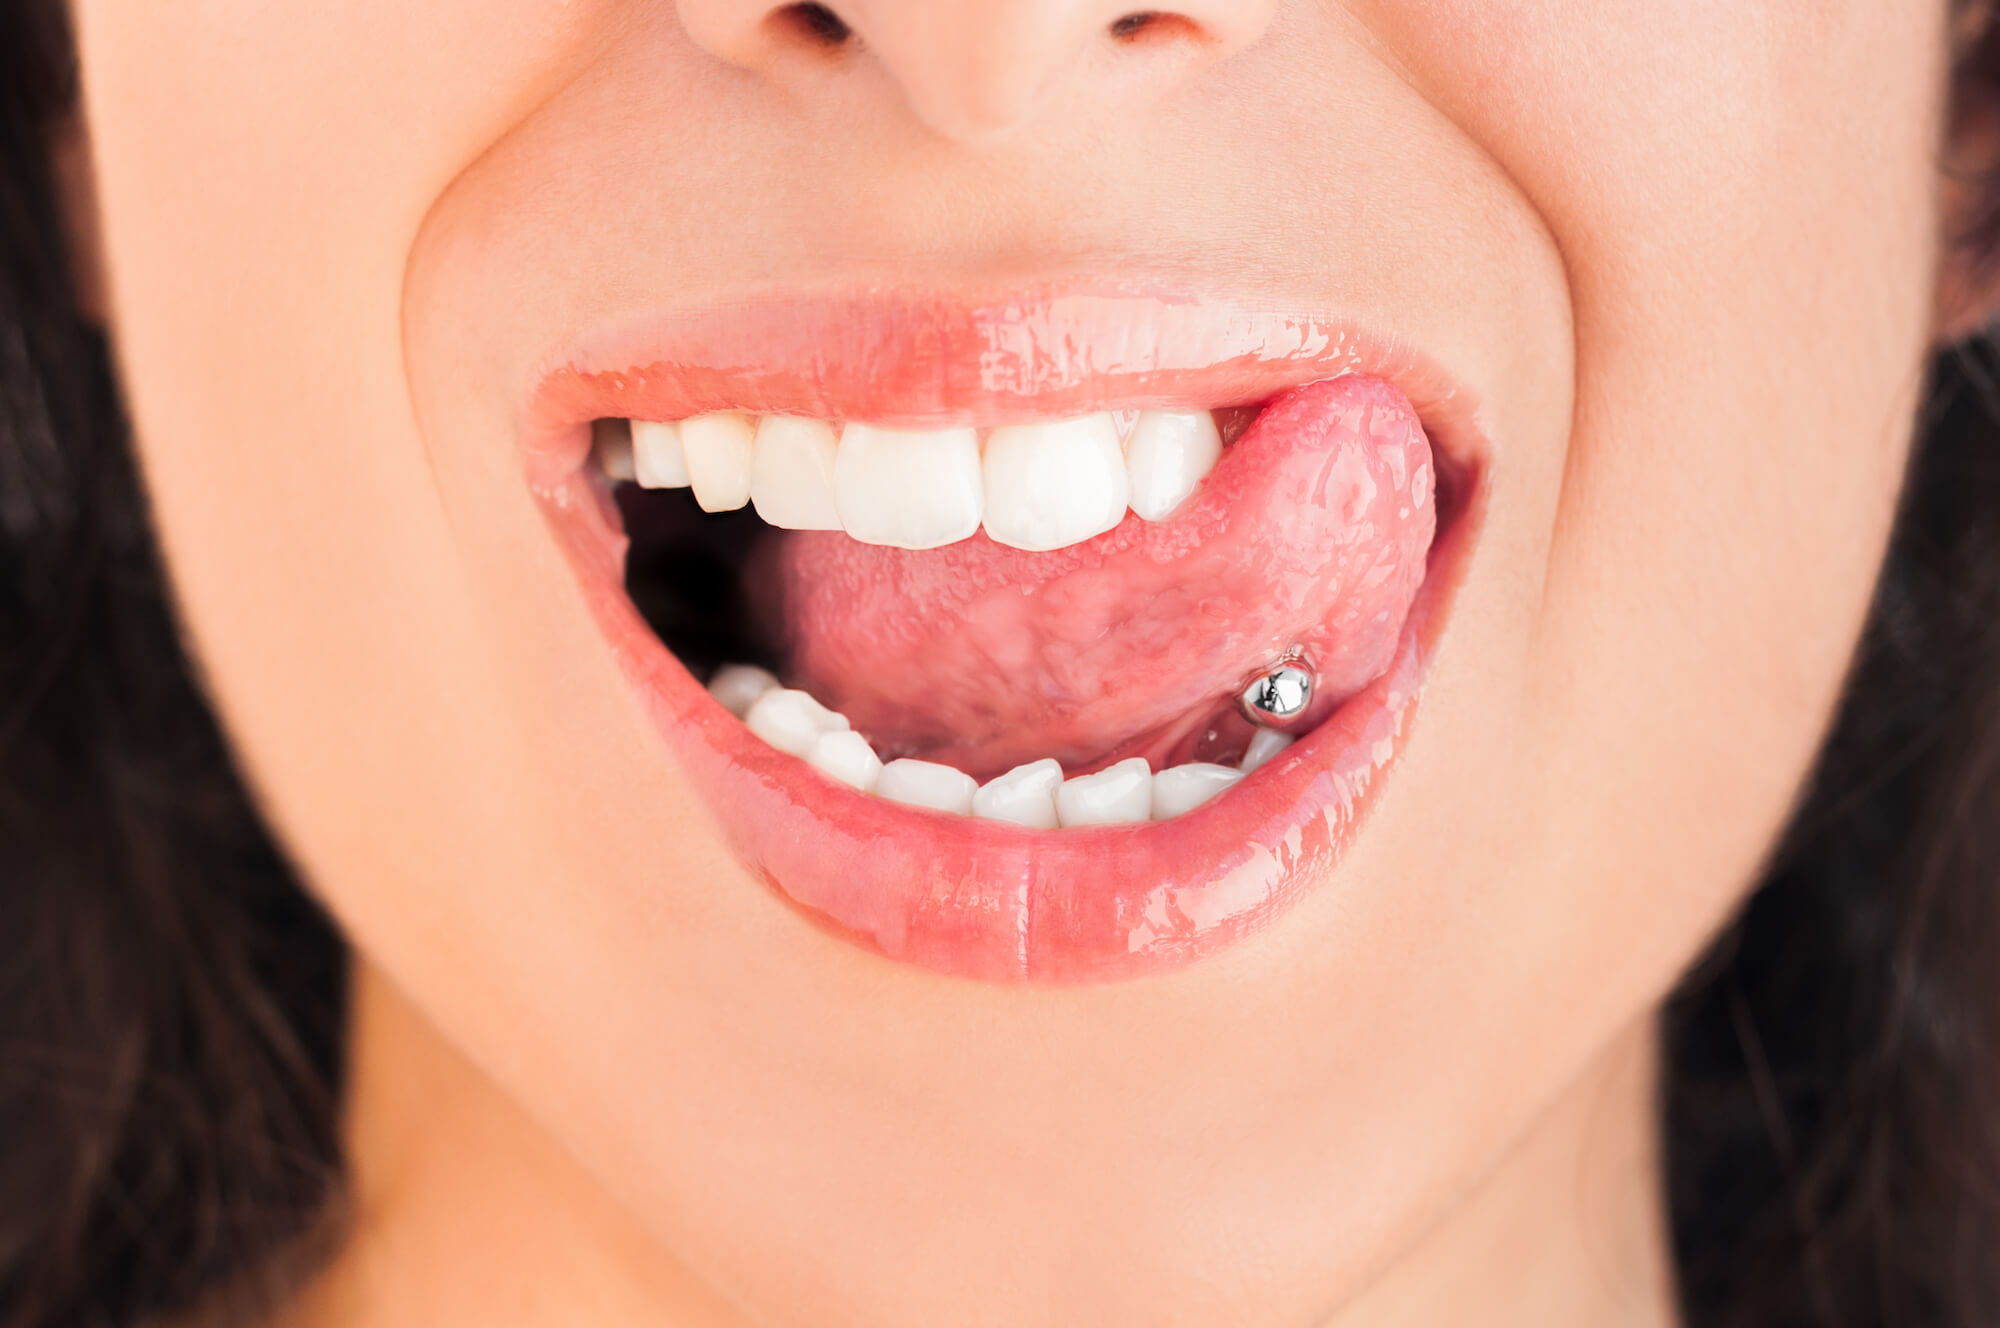 tongue piercings cause gum recession